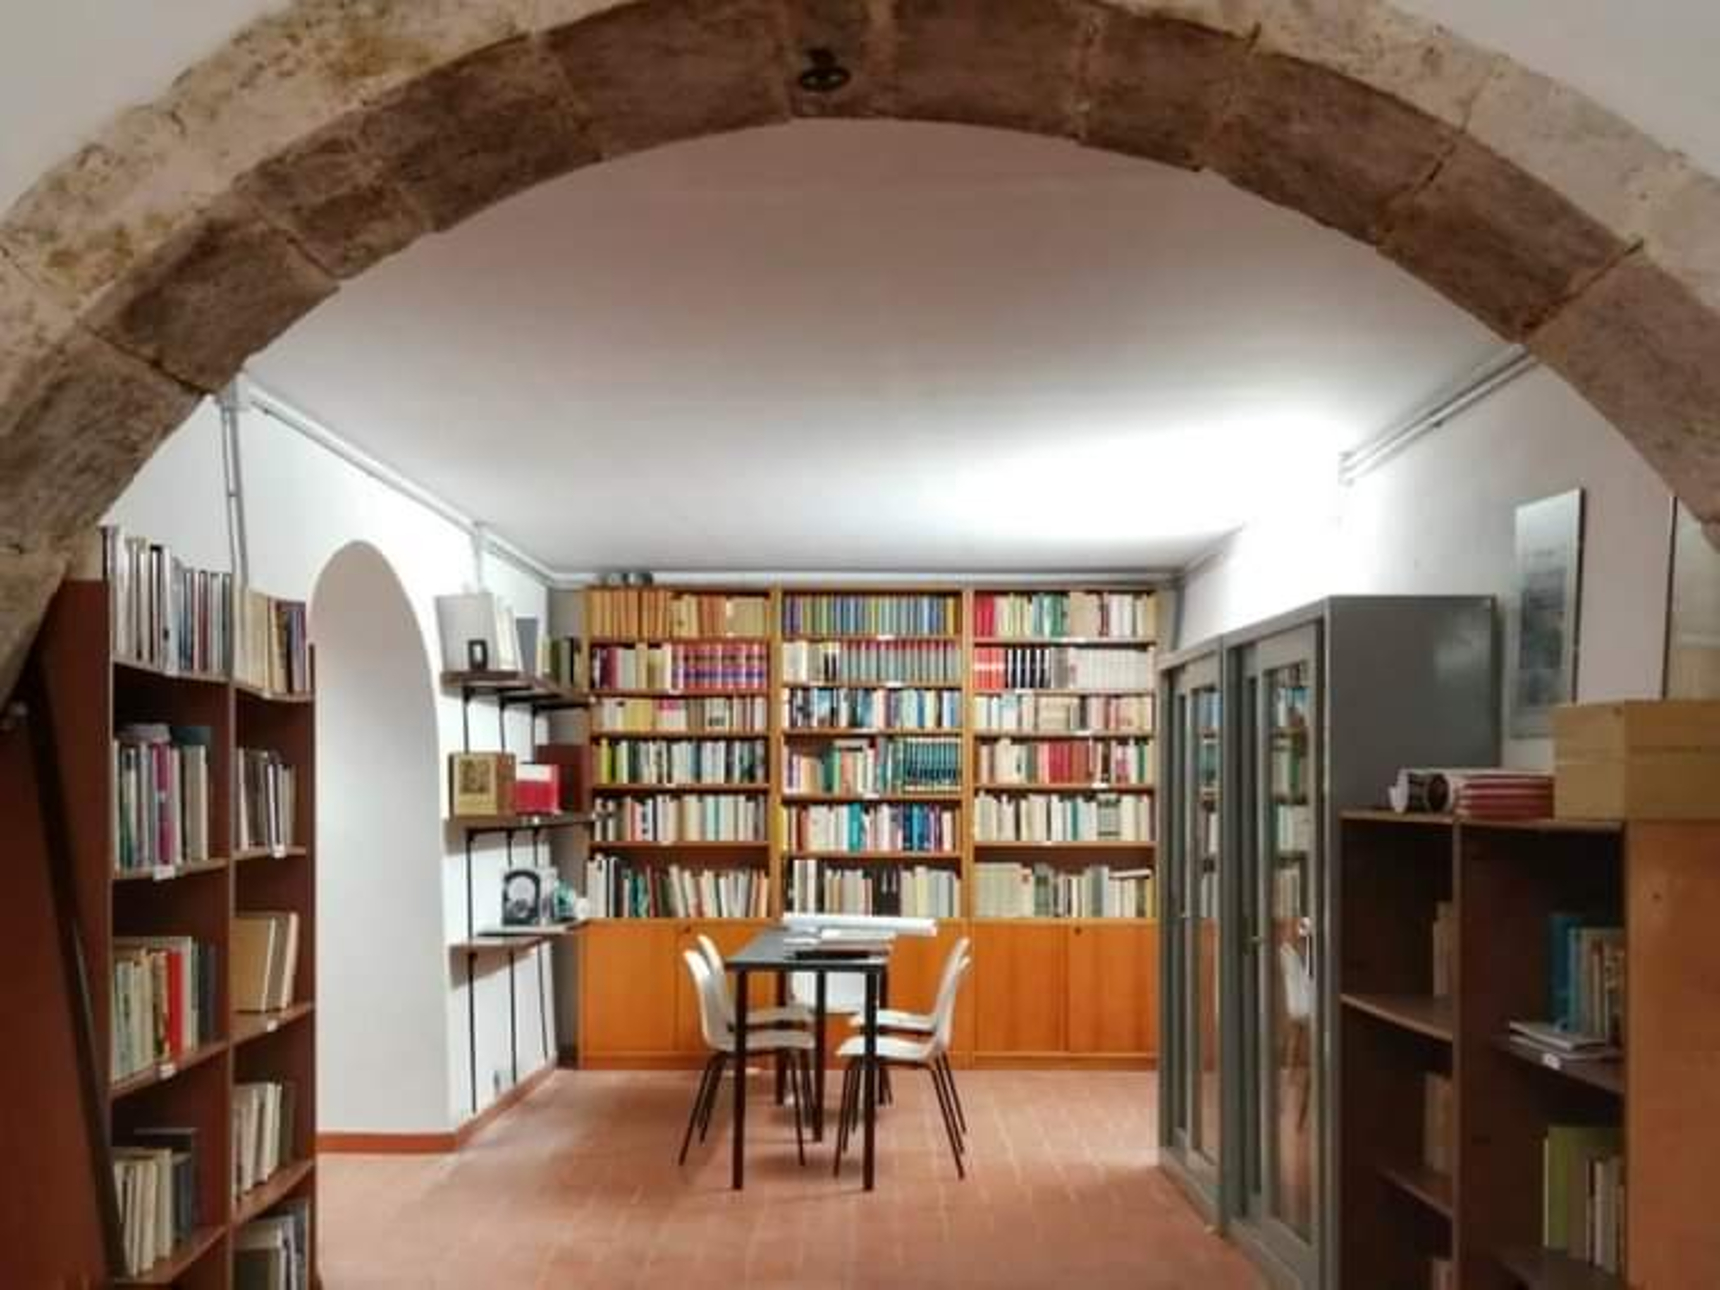 L'intervista: Matteo Servilio racconta la nascita della biblioteca a Bugnara (Aq)